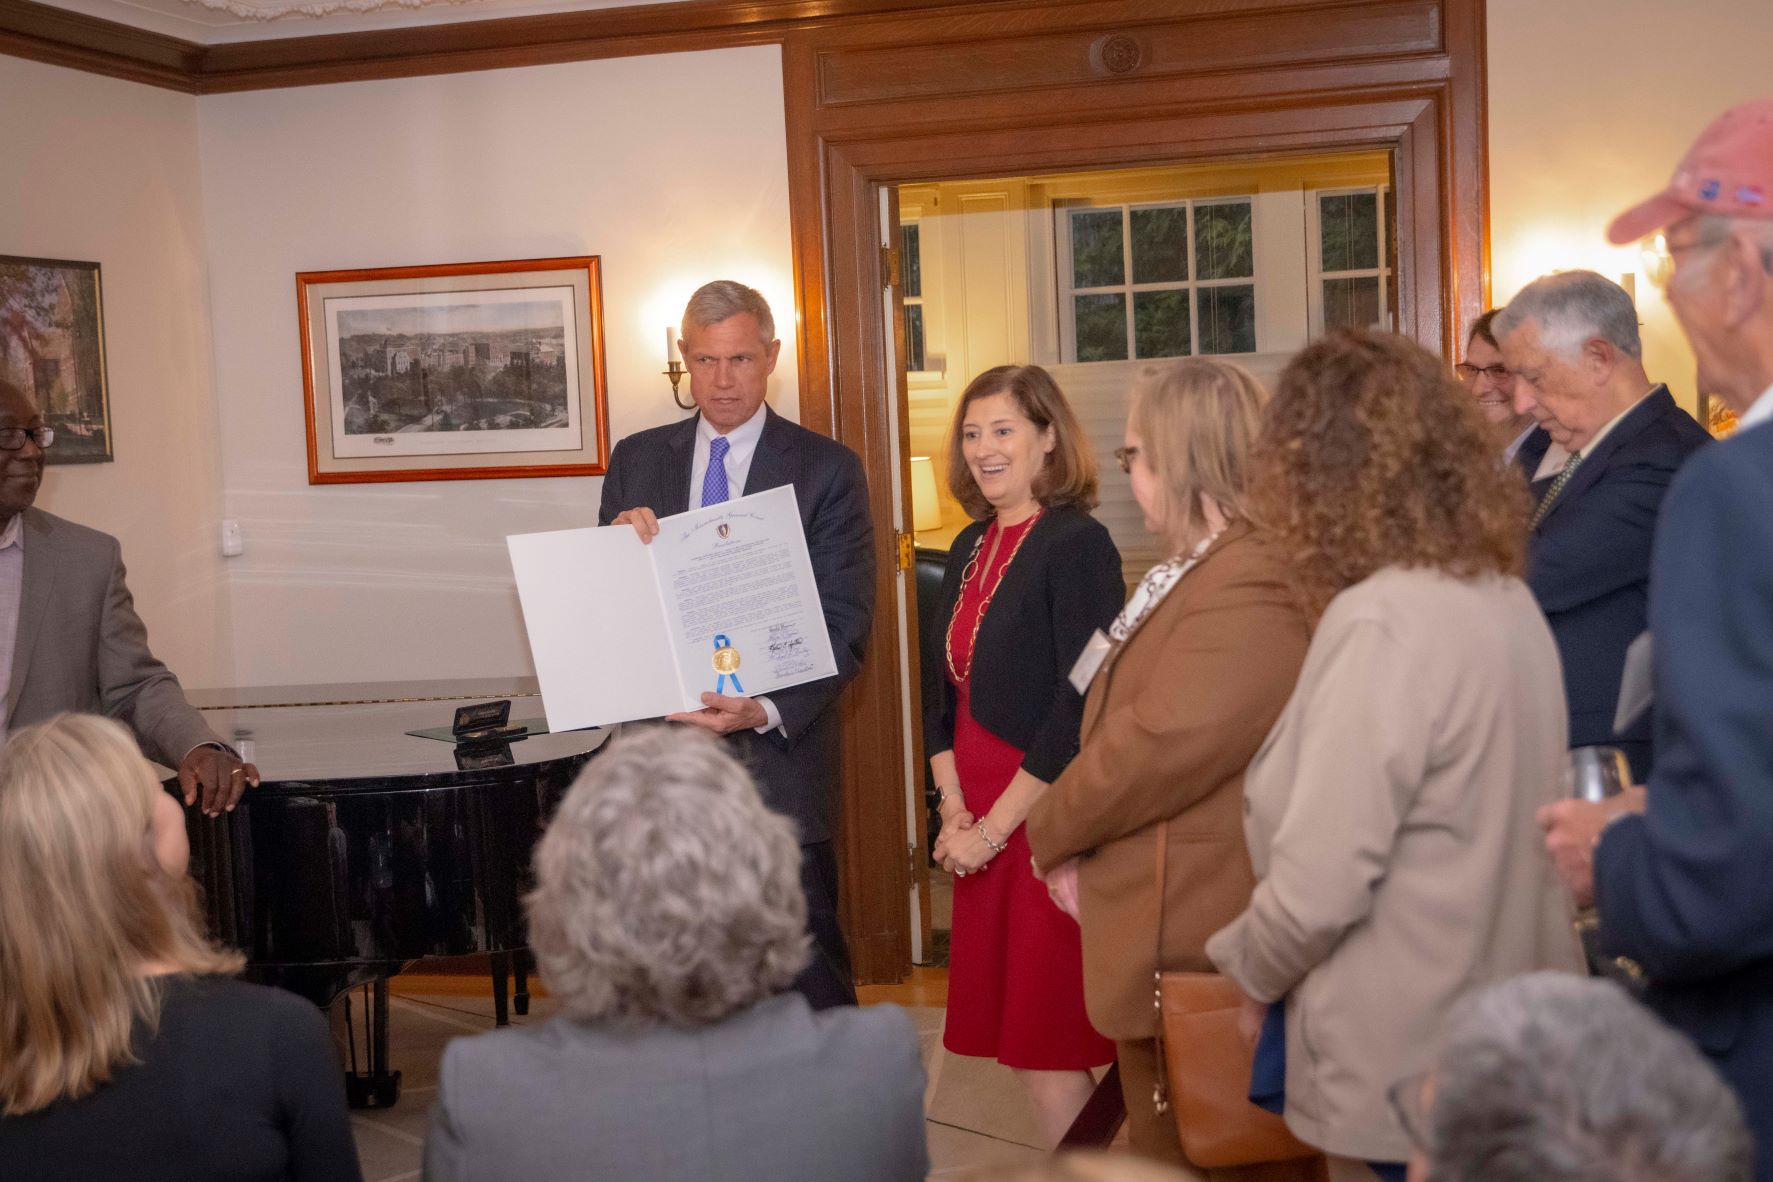 State Representative John Mahoney presents President Leshin with a proclamation from the Massachusetts House of Representatives alt